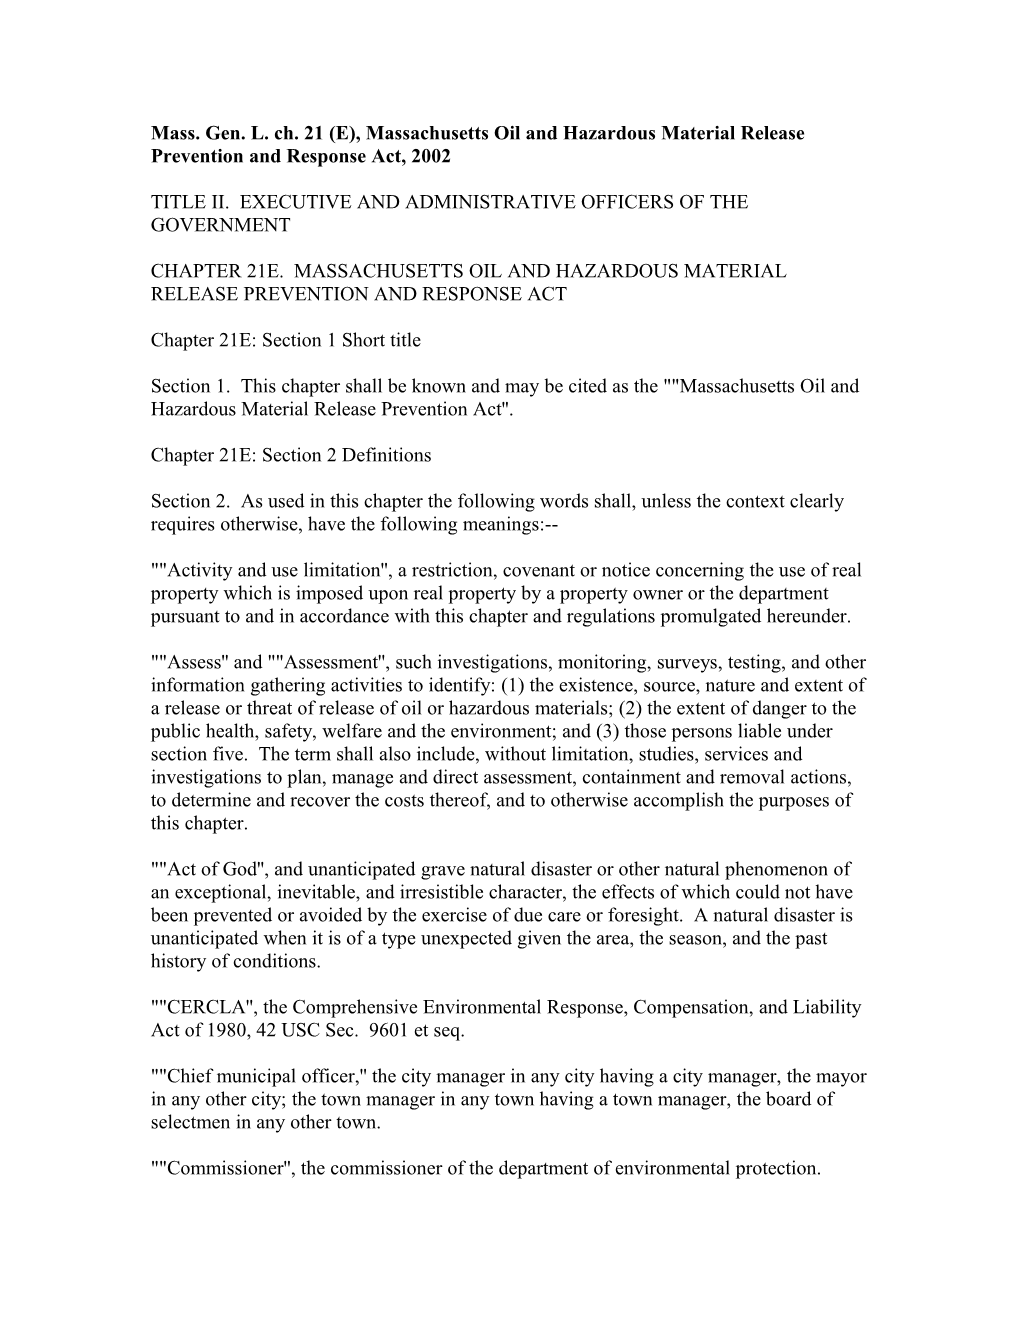 Mass. Gen. L. Ch. 21 (E), Massachusetts Oil and Hazardous Material Release Prevention